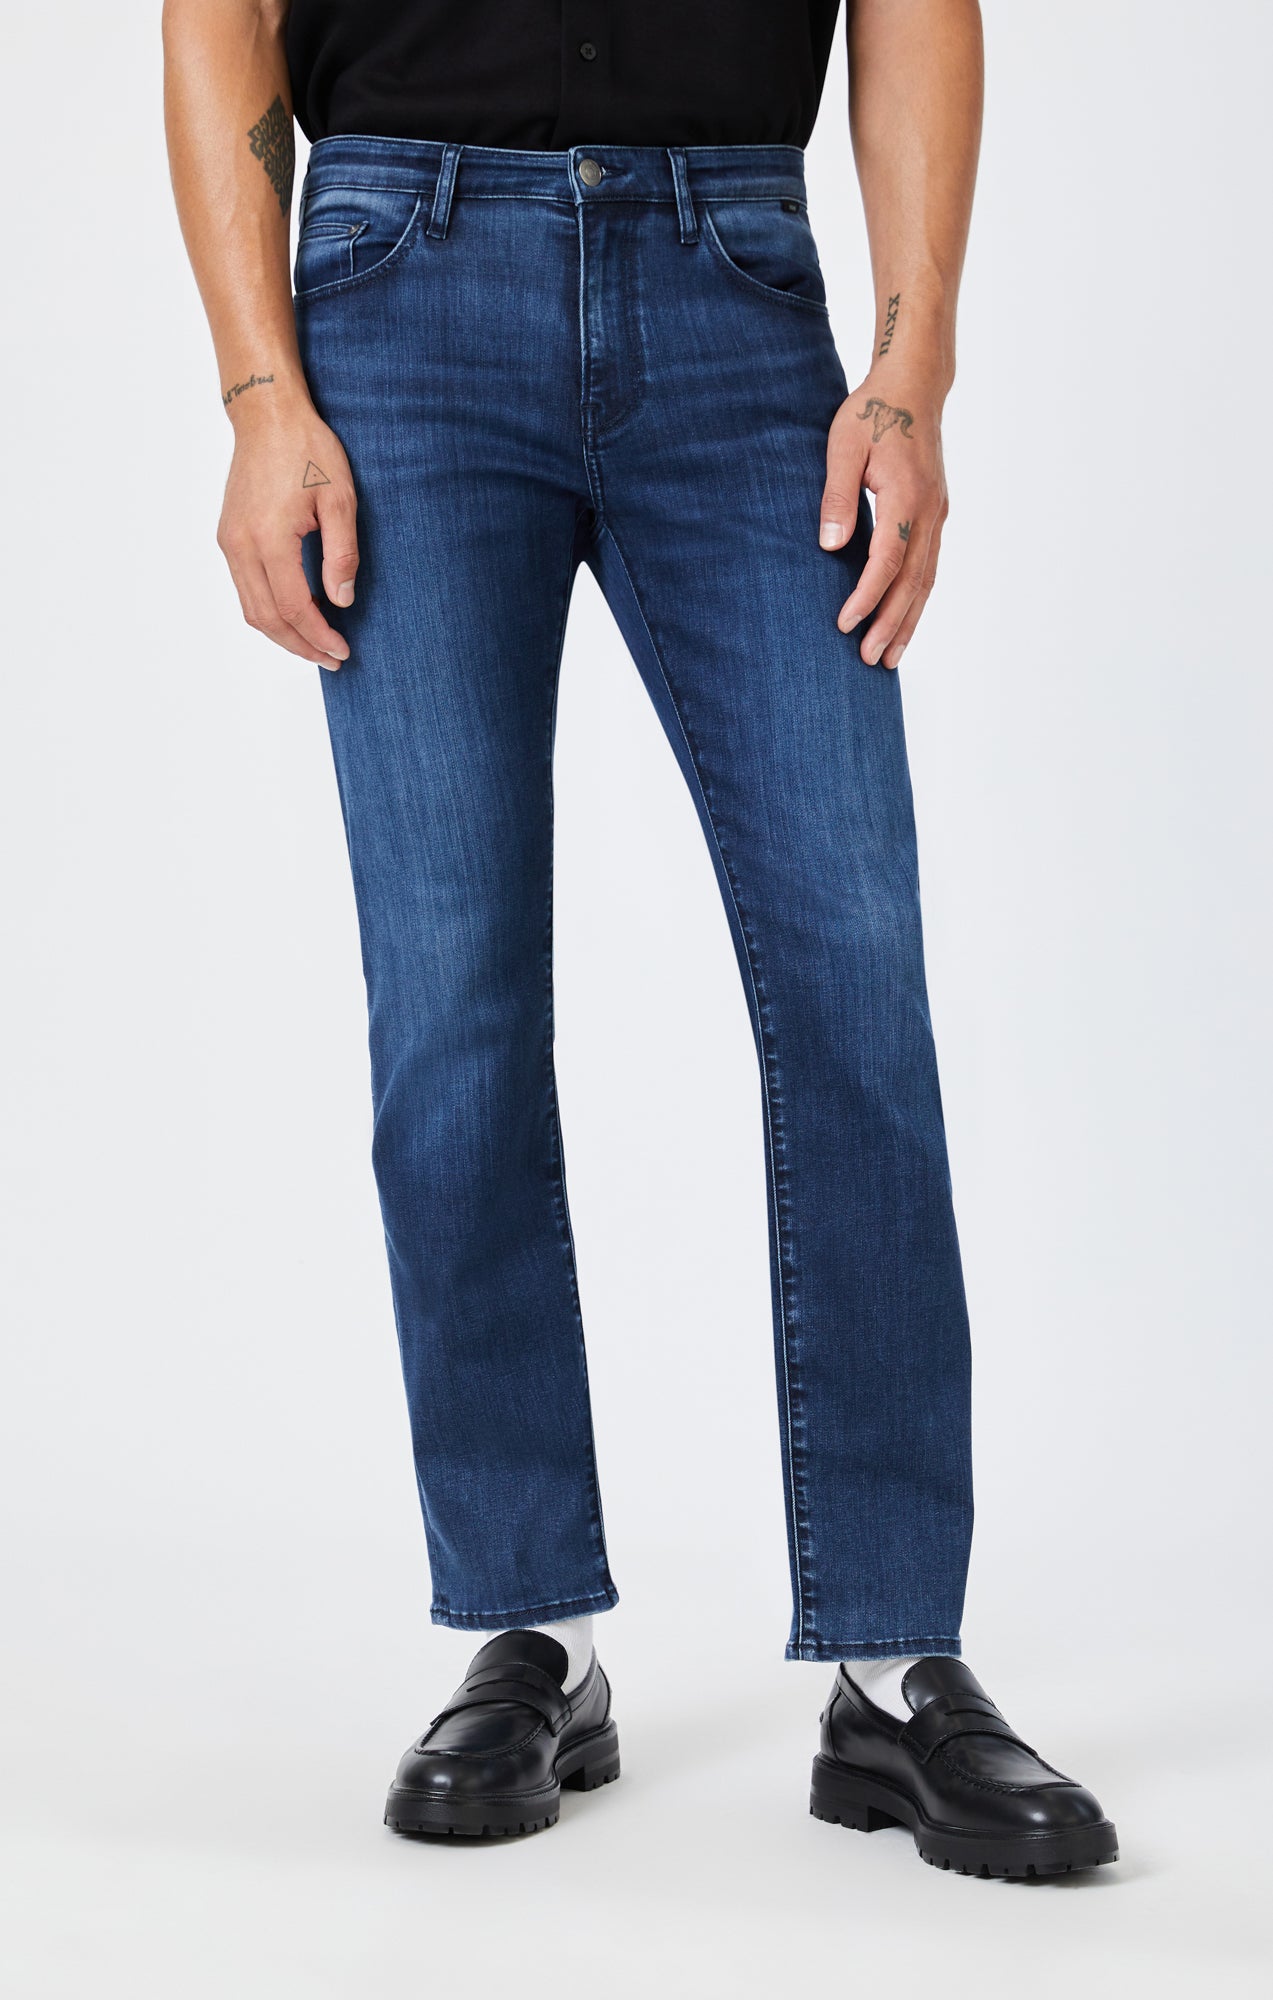 Long Inseam Jeans -  Canada